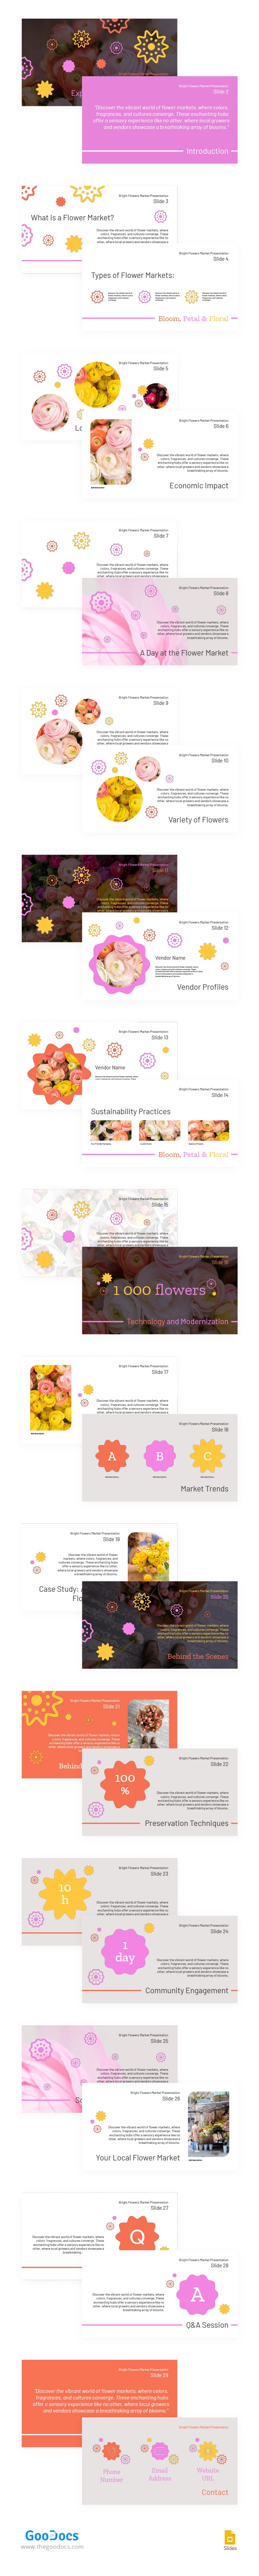 Heller Blumenmarkt - free Google Docs Template - 10067045